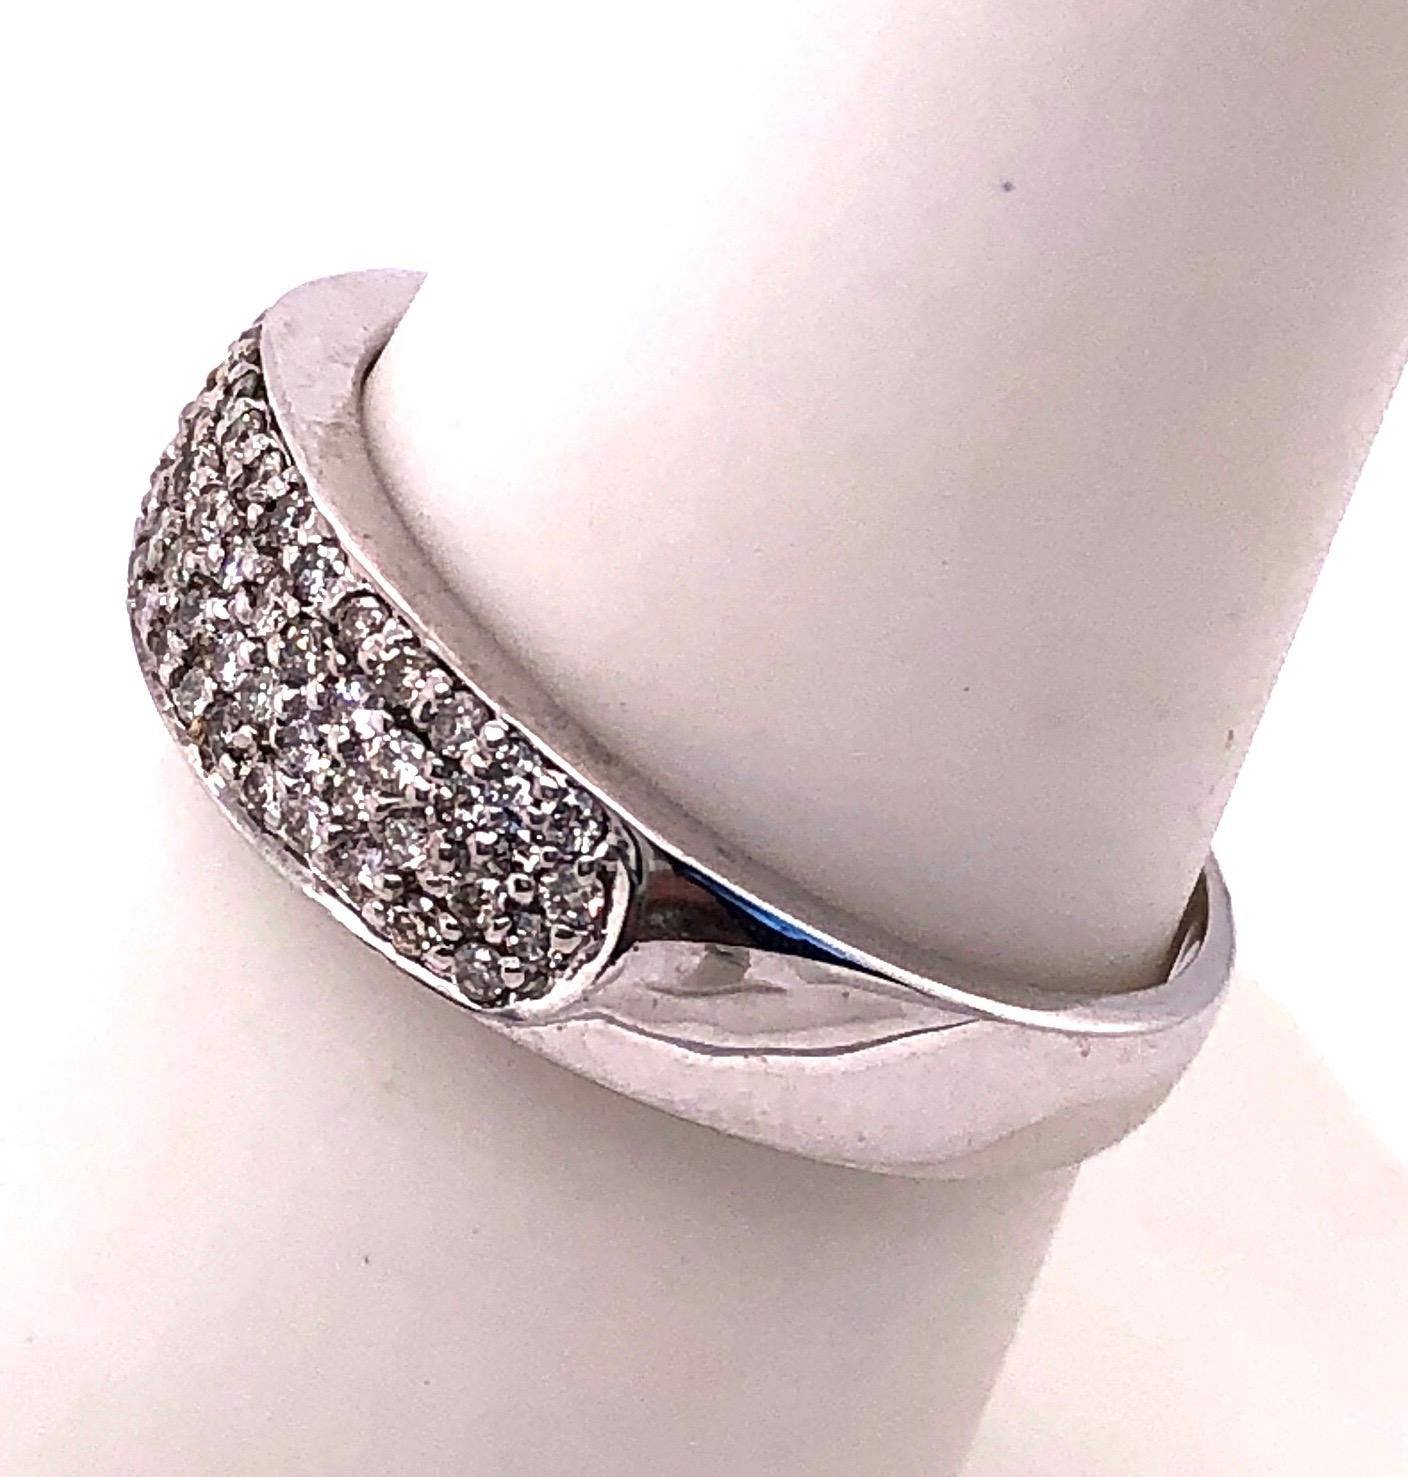 14 Karat White Gold Bridal Ring with Round Diamonds 1.00 Total Diamond Weight.
Size 7.5
3.03 grams total weight.